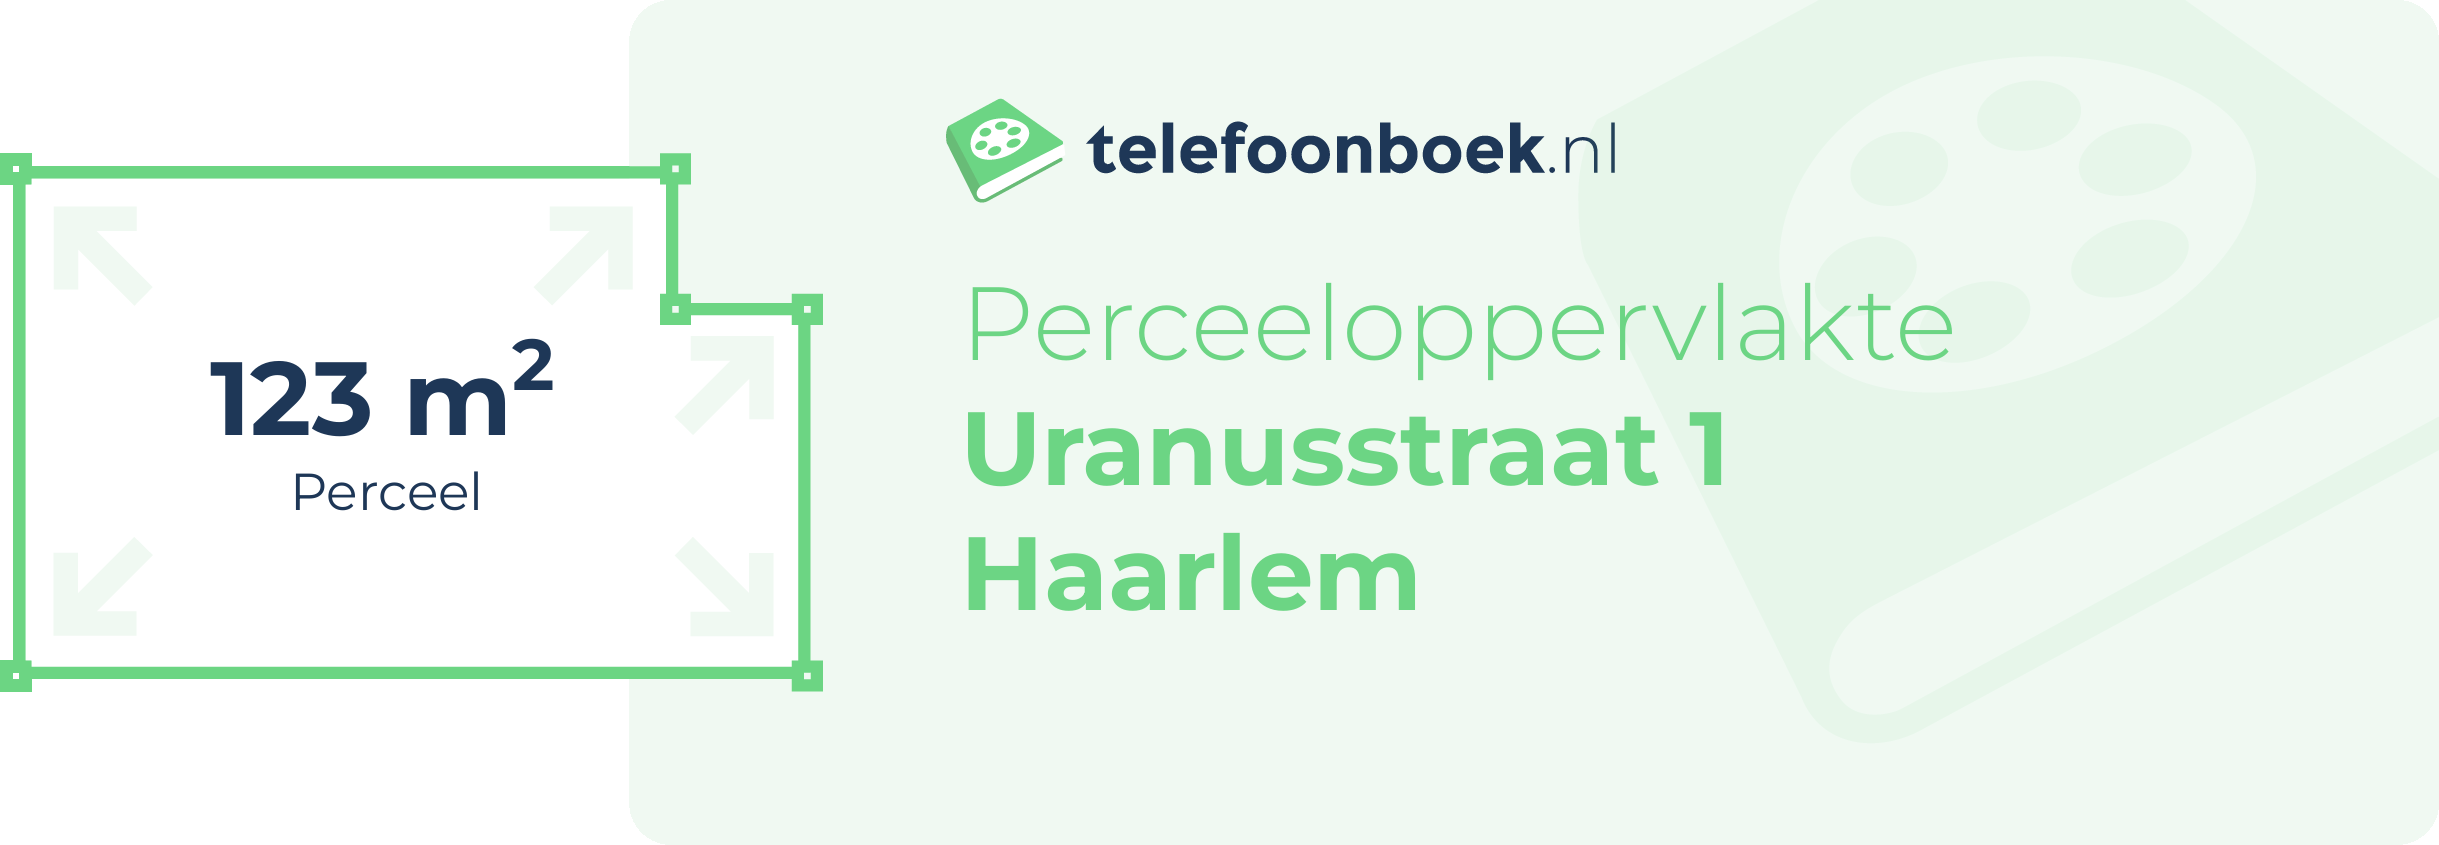 Perceeloppervlakte Uranusstraat 1 Haarlem